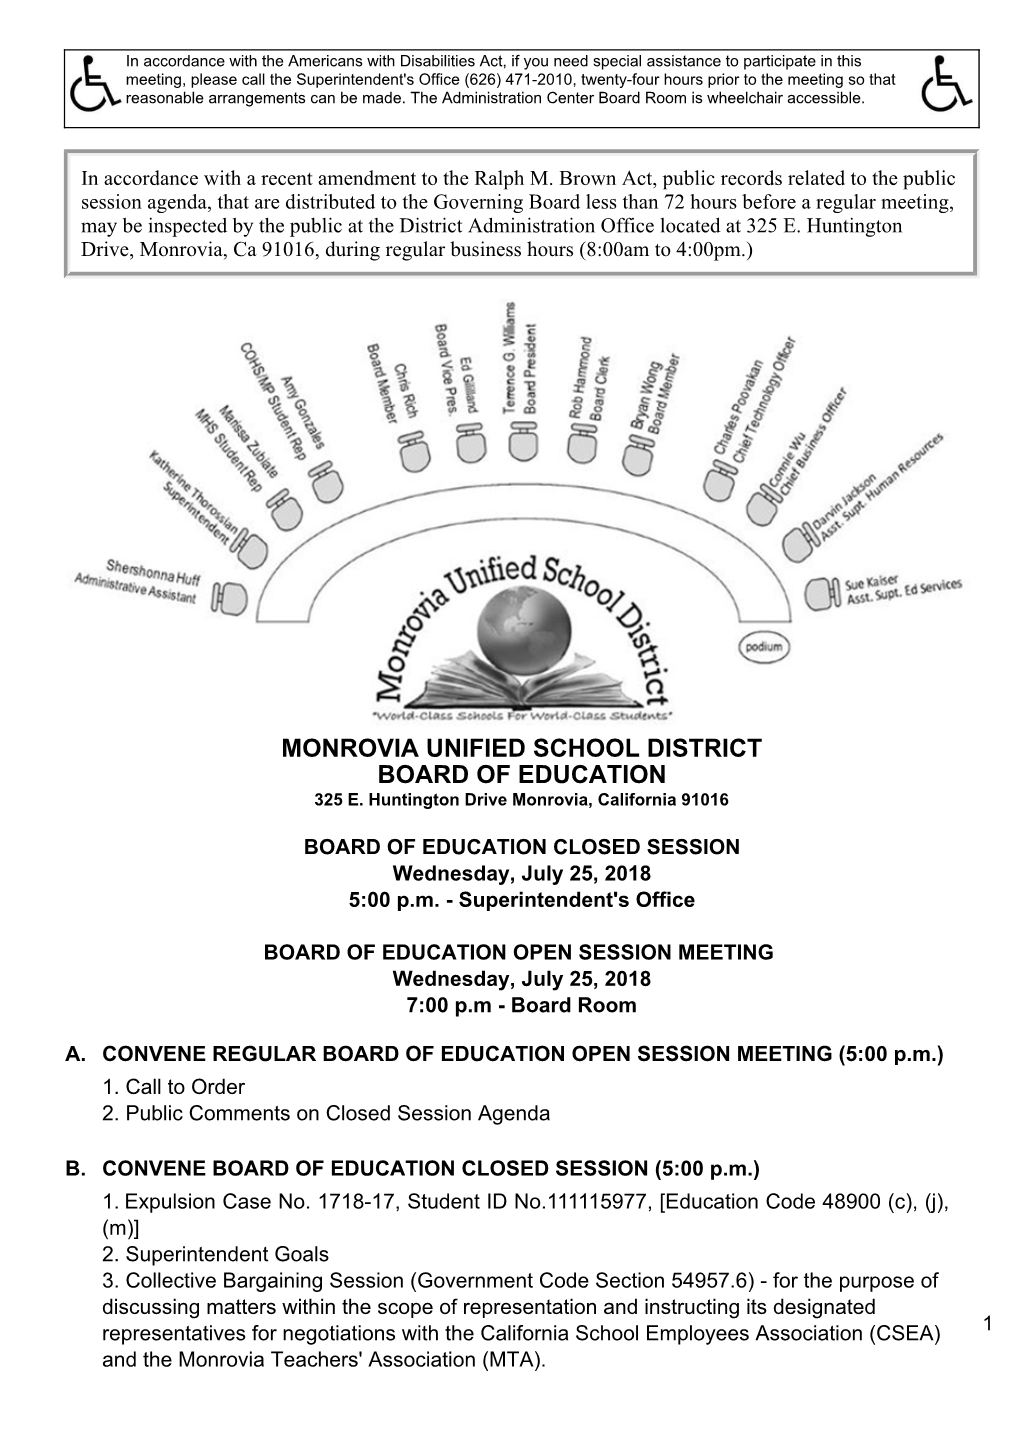 Monrovia Unified School District Board of Education 325 E